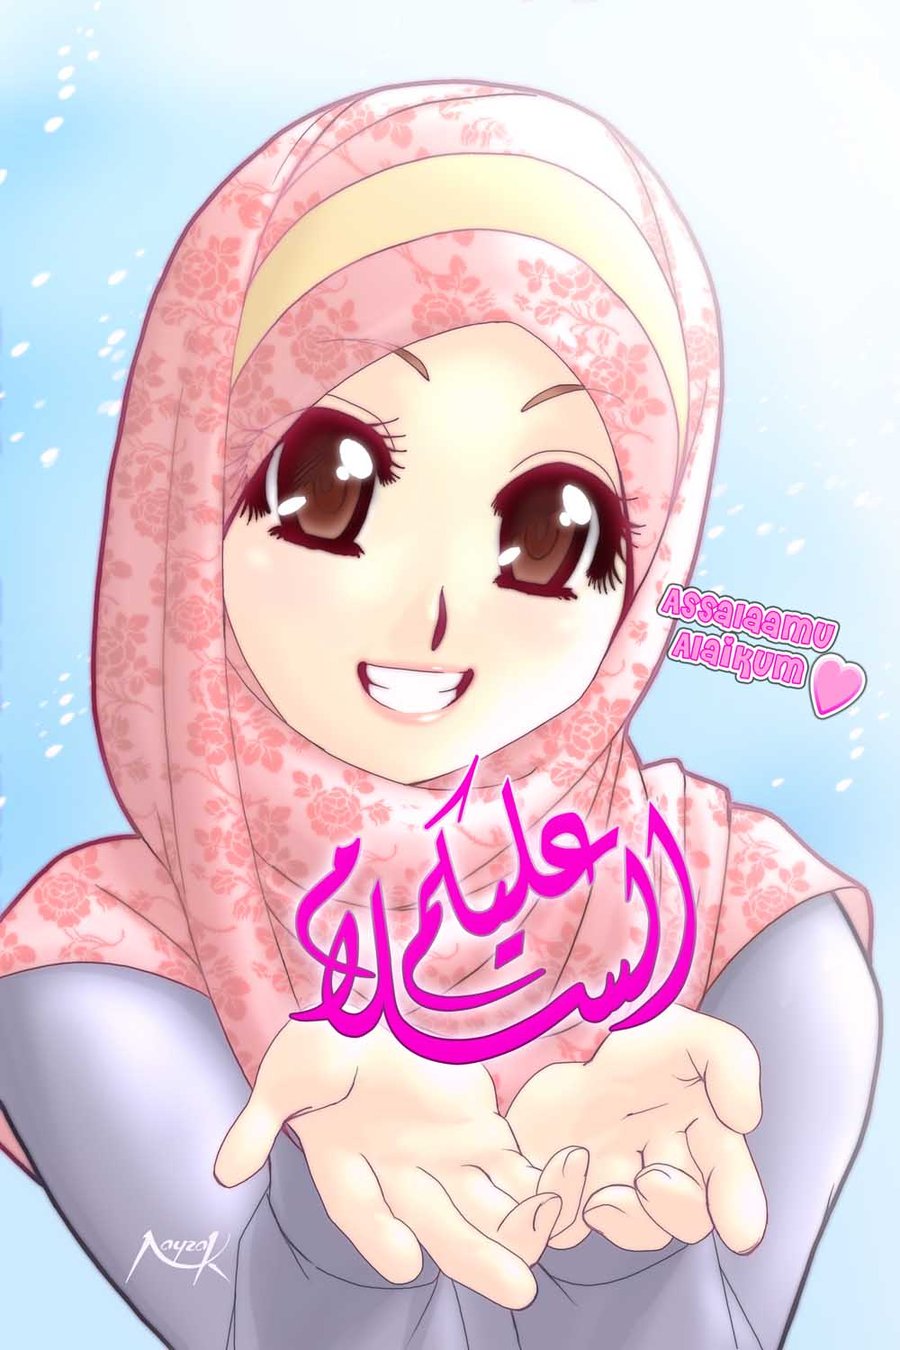 Kartun Muslimah Part 2 - JIWAROSAK.COM